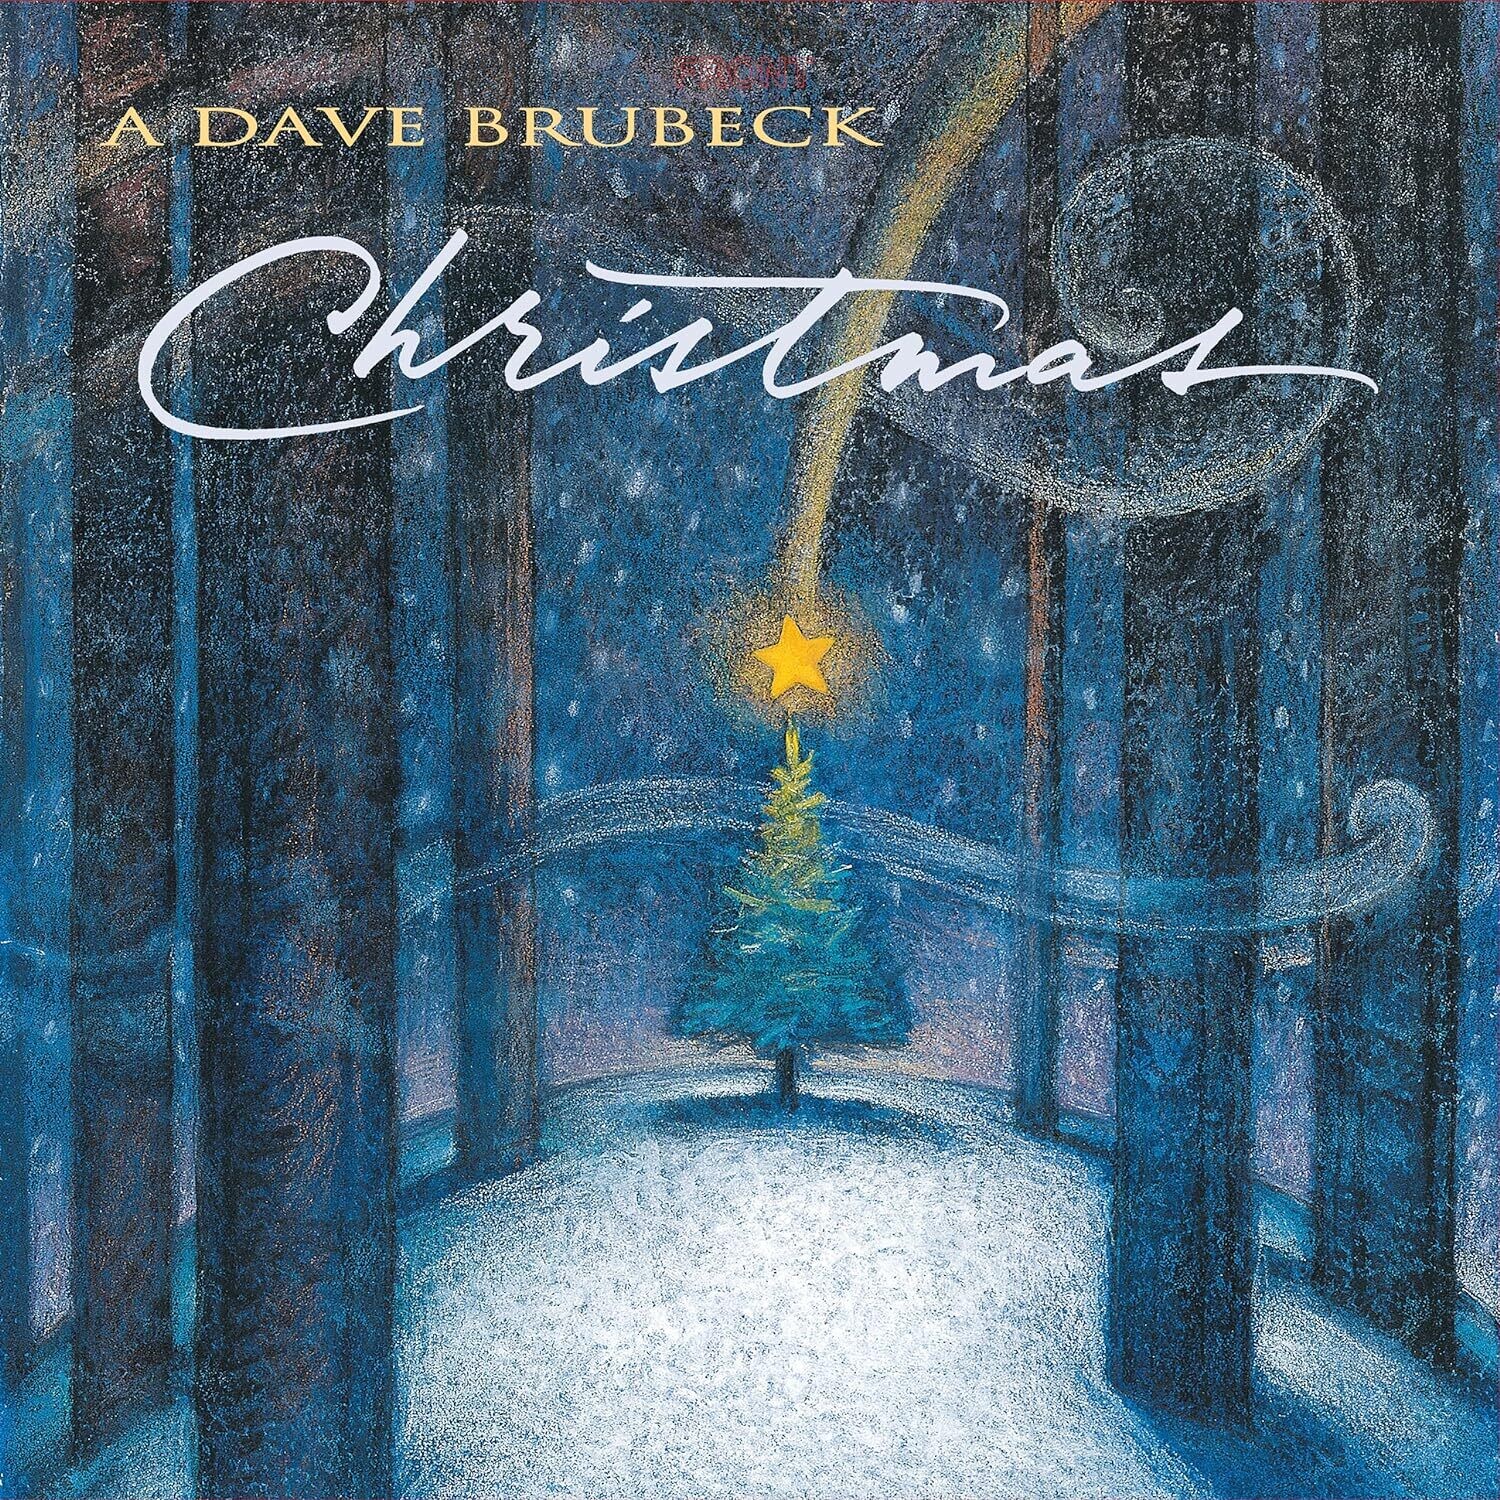 Dave Brubeck – A Dave Brubeck Christmas LP